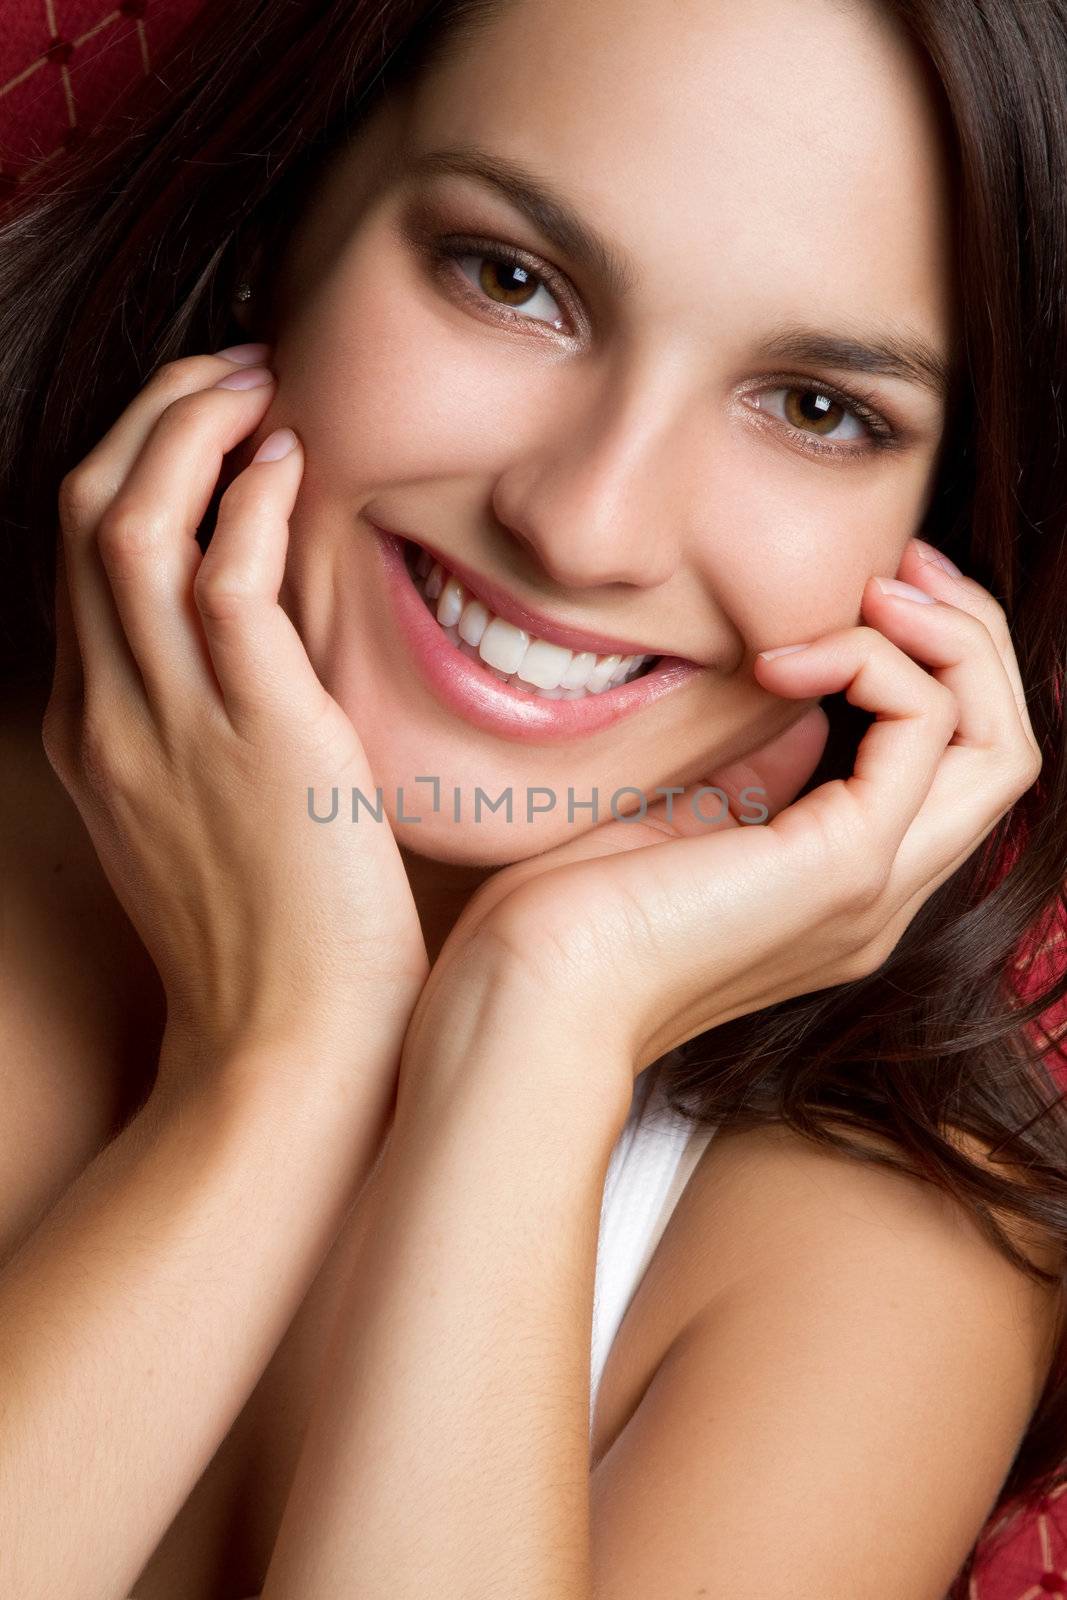 Beautiful young woman smiling portrait